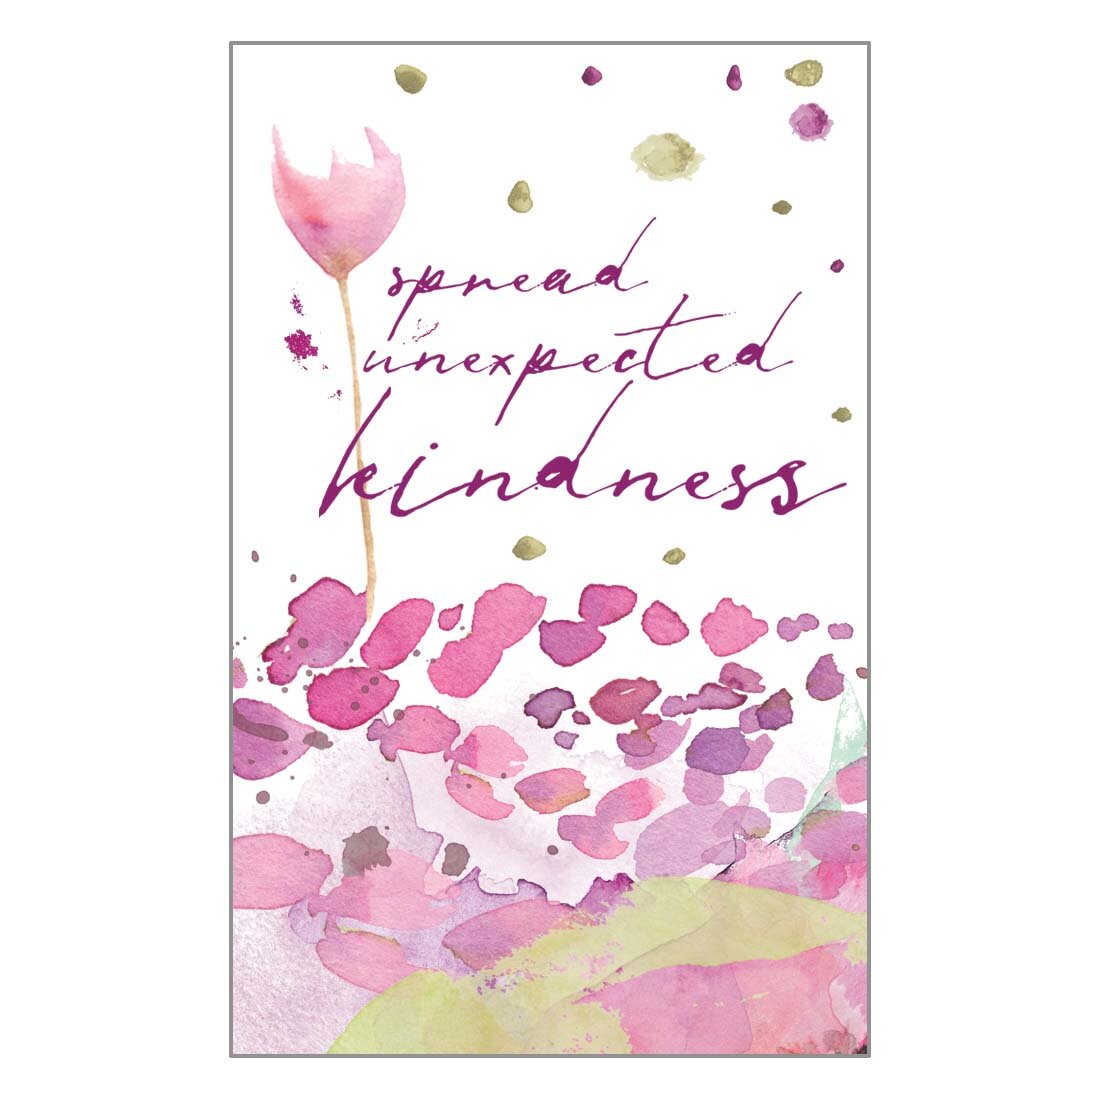 Prayer Card - Spread Kindness